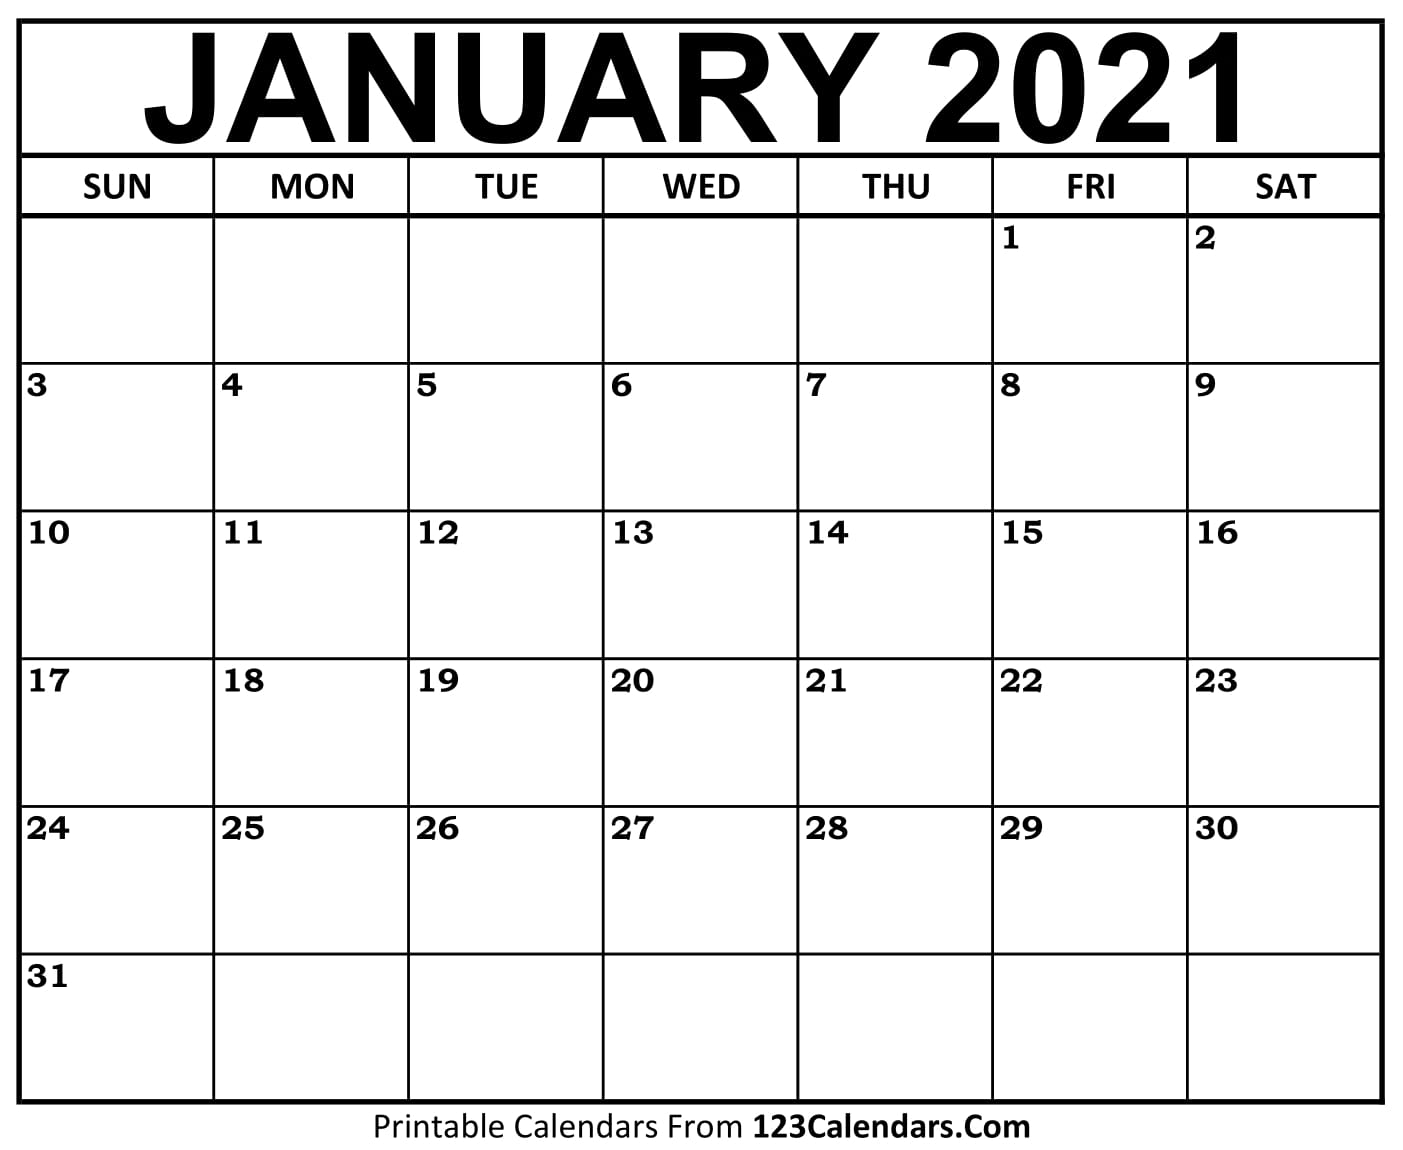 December 2021 January 2022 Calendar Printable Printable January 2022 Calendar Templates - 123Calendars.com